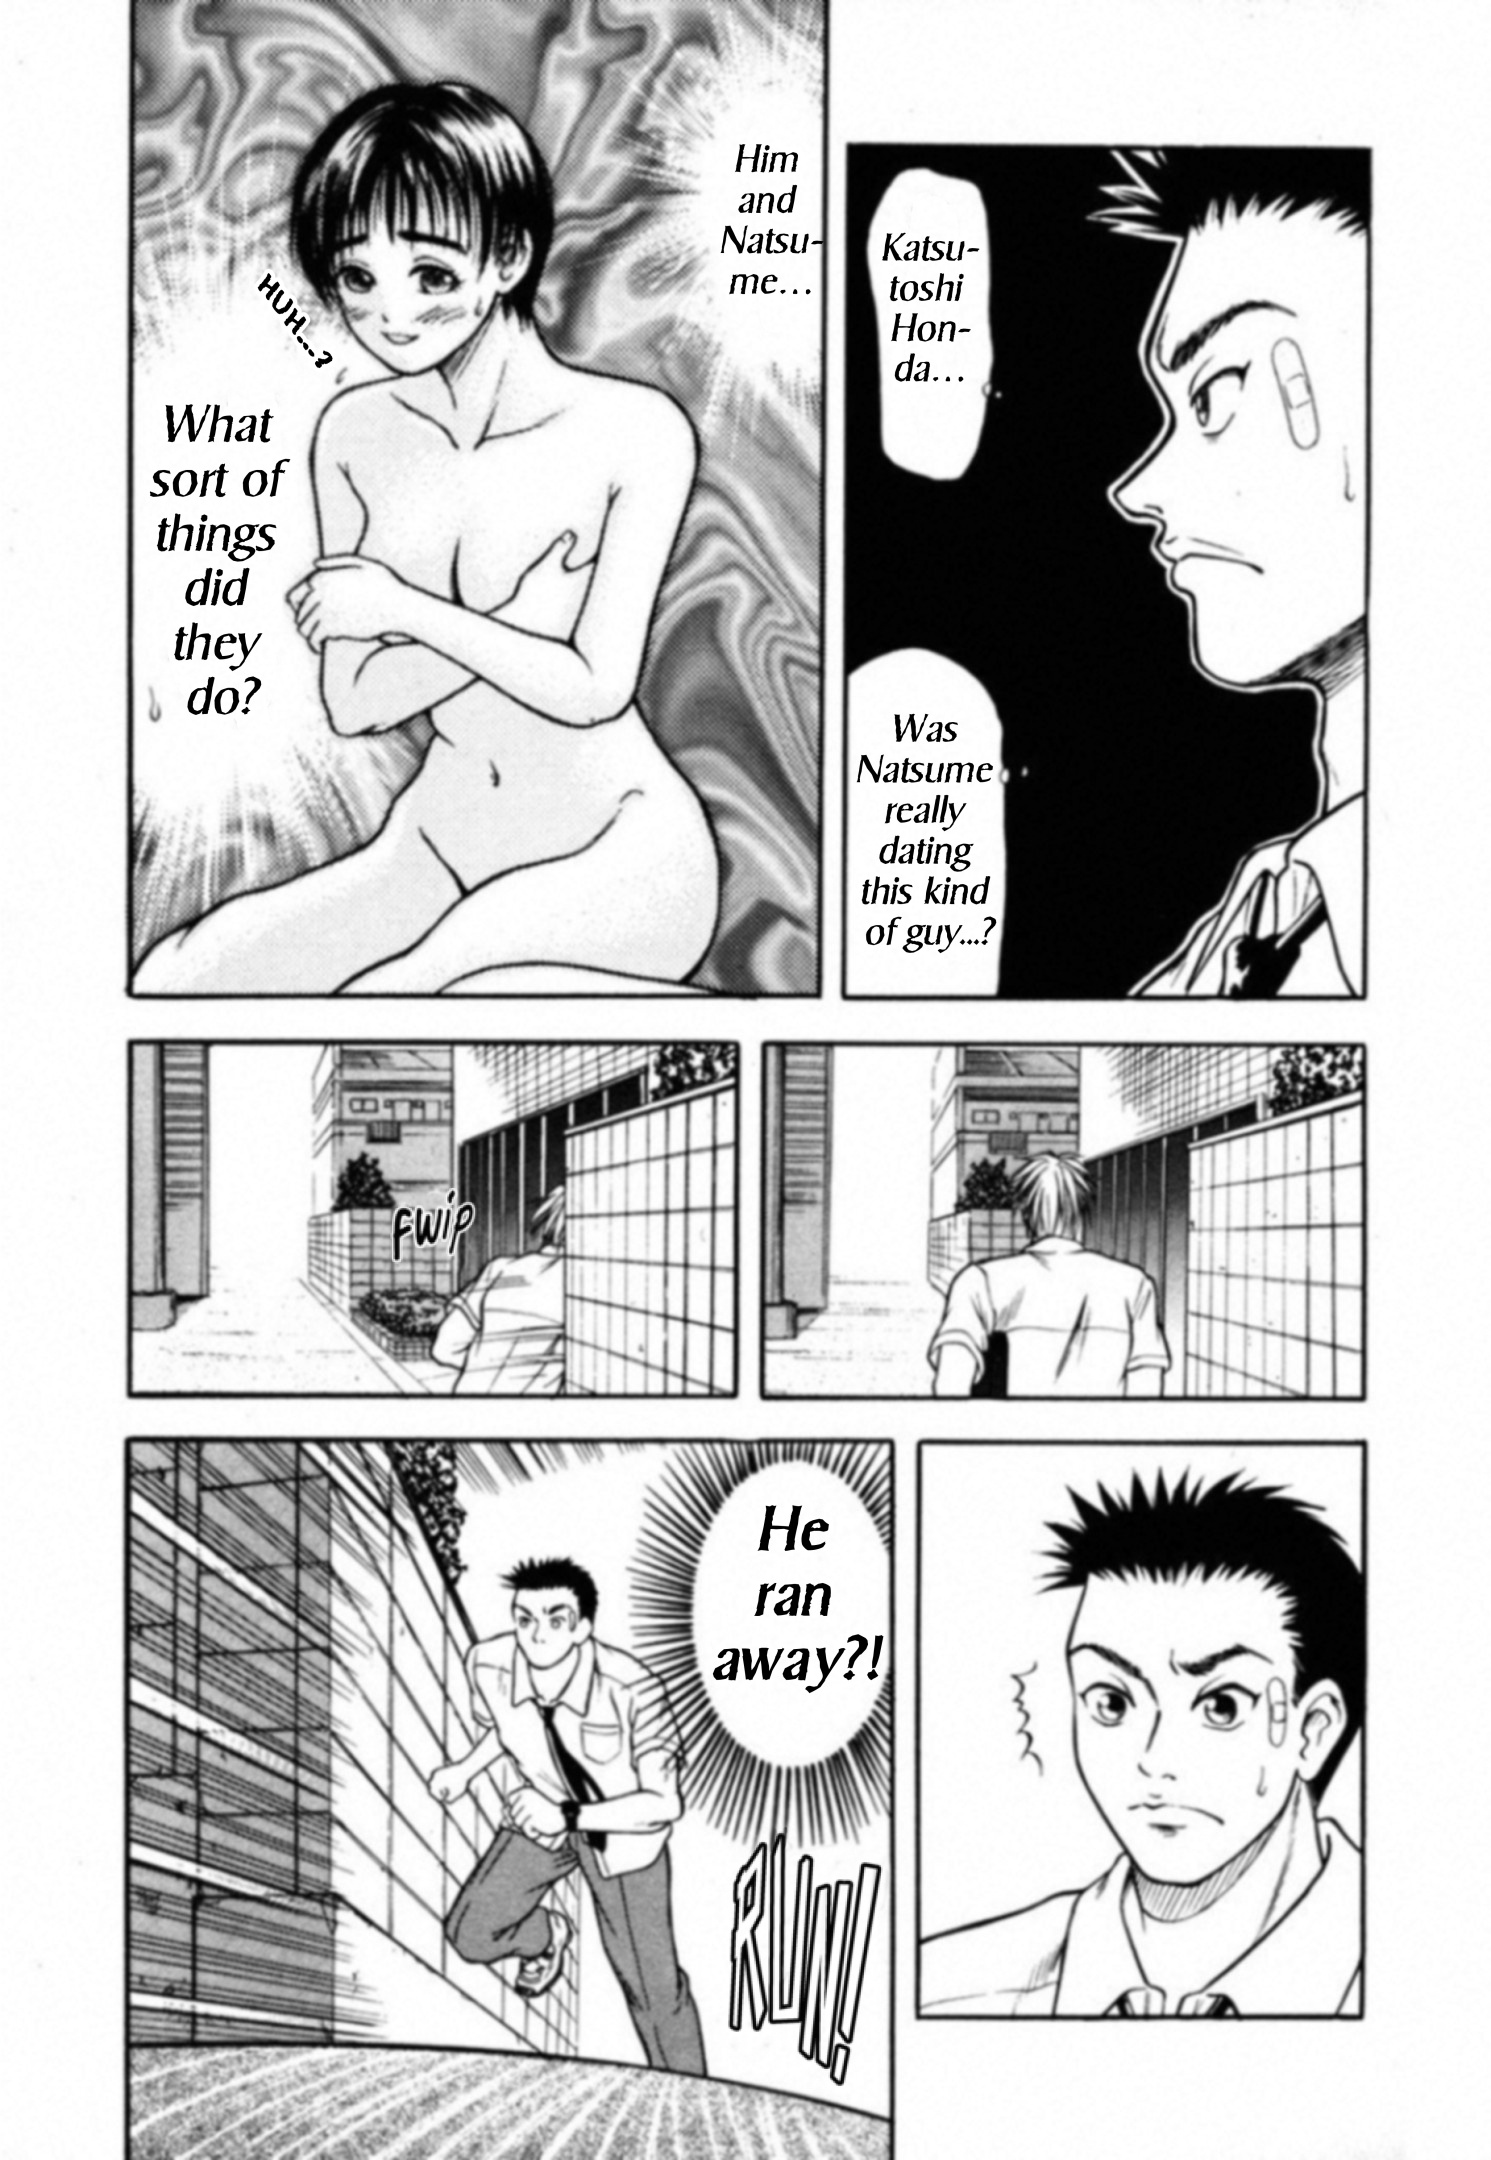 Kakeru Vol.1 Chapter 3: The Runaway Girl - 3 - Picture 3